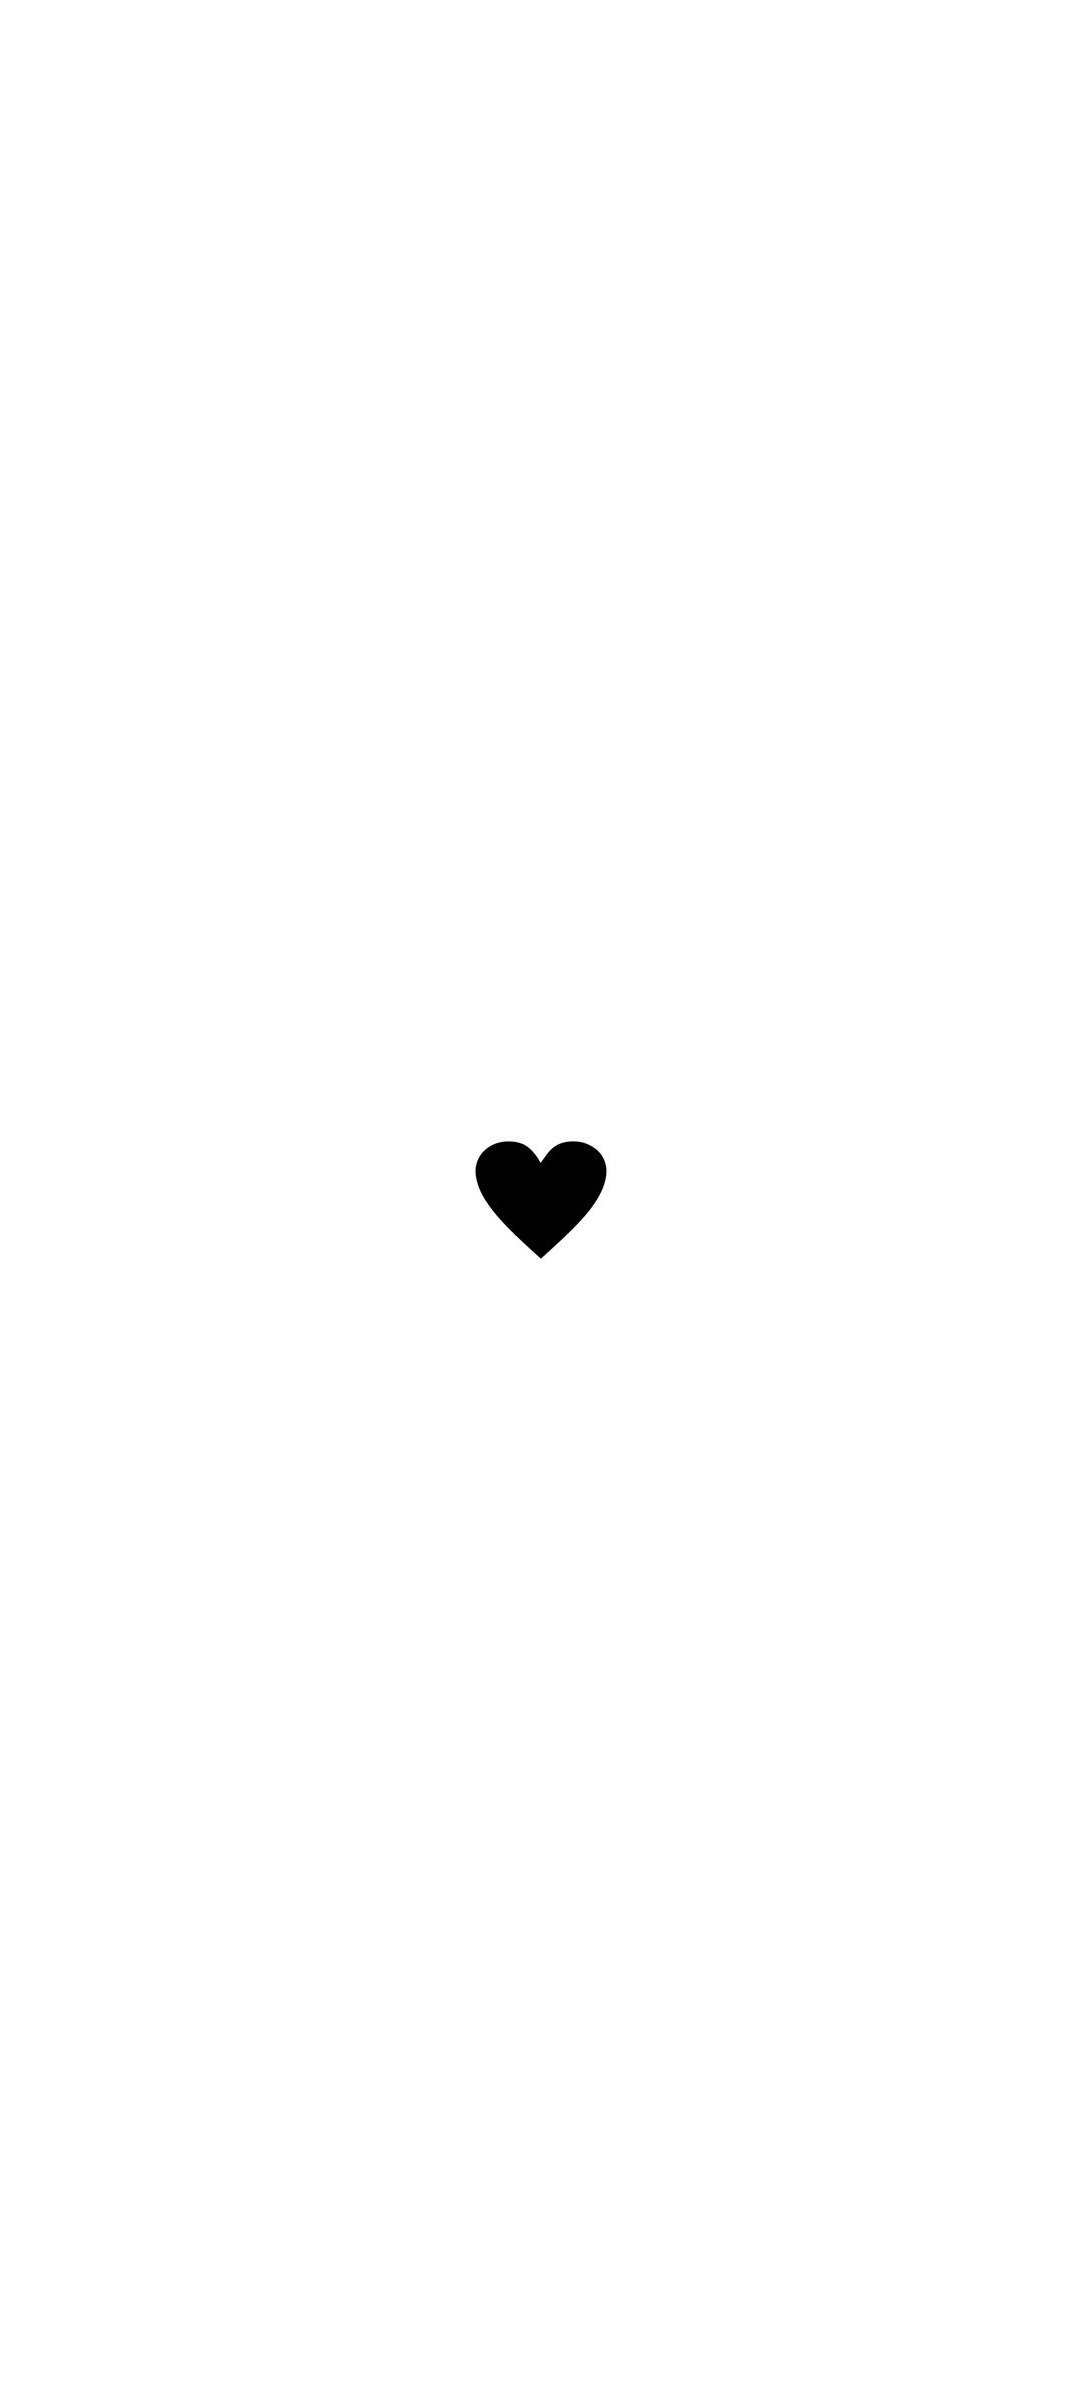 black heart wallpaper by JULIANNA  Download on ZEDGE  d340